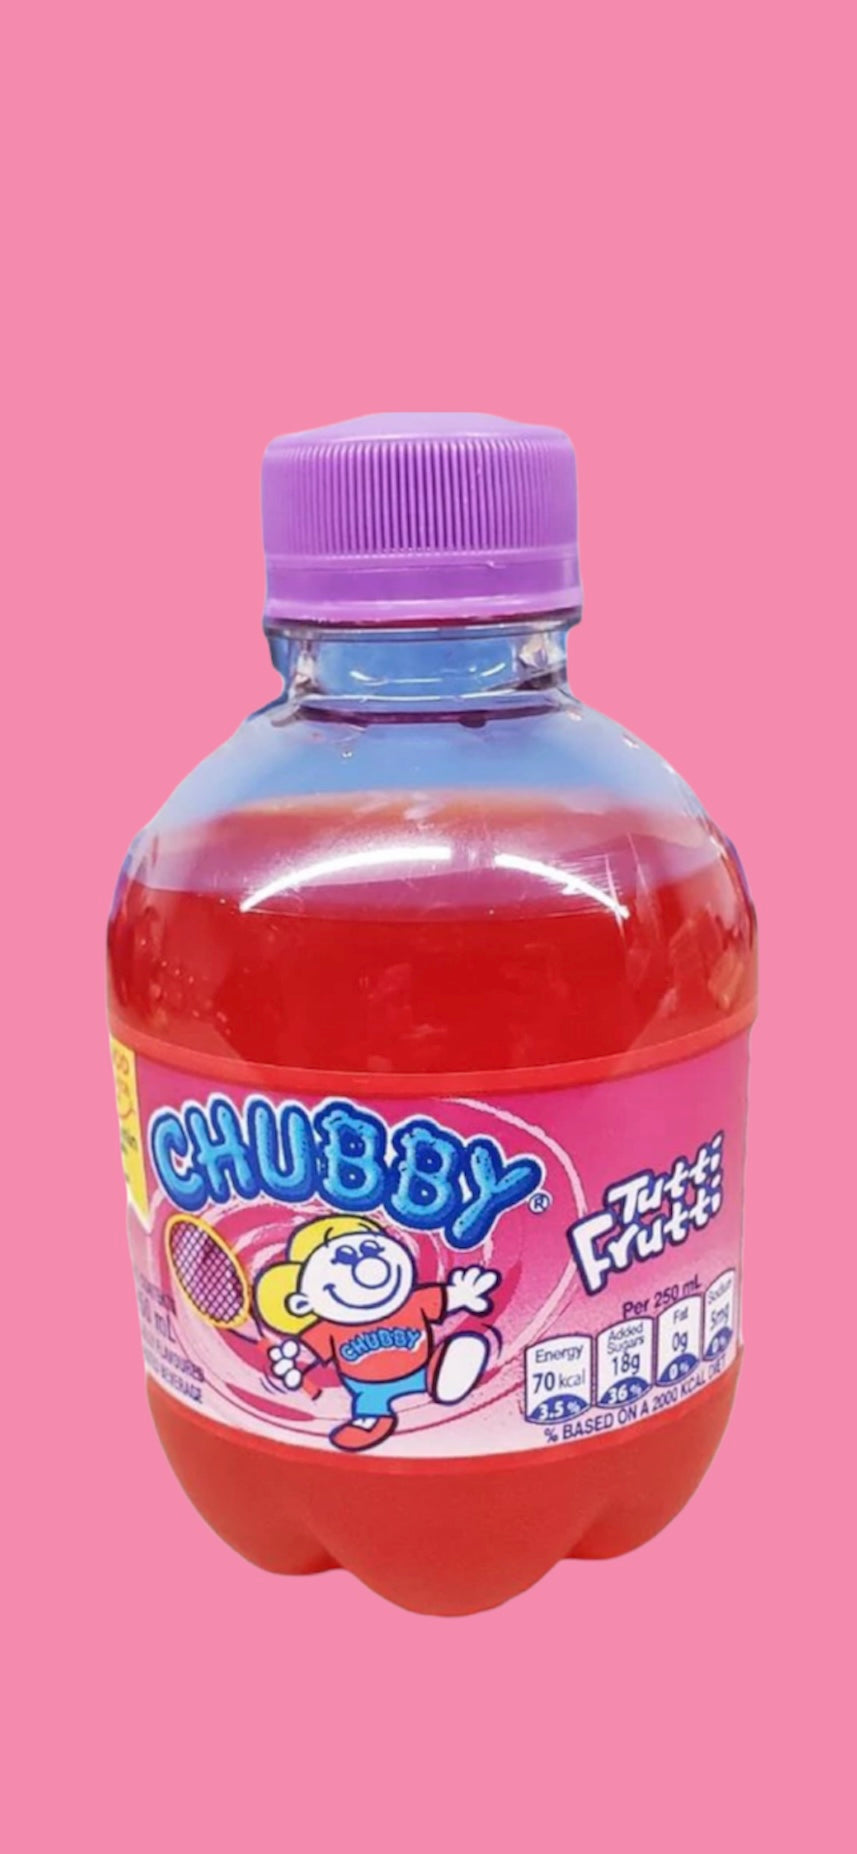 Chubby Soda - 10 varieties